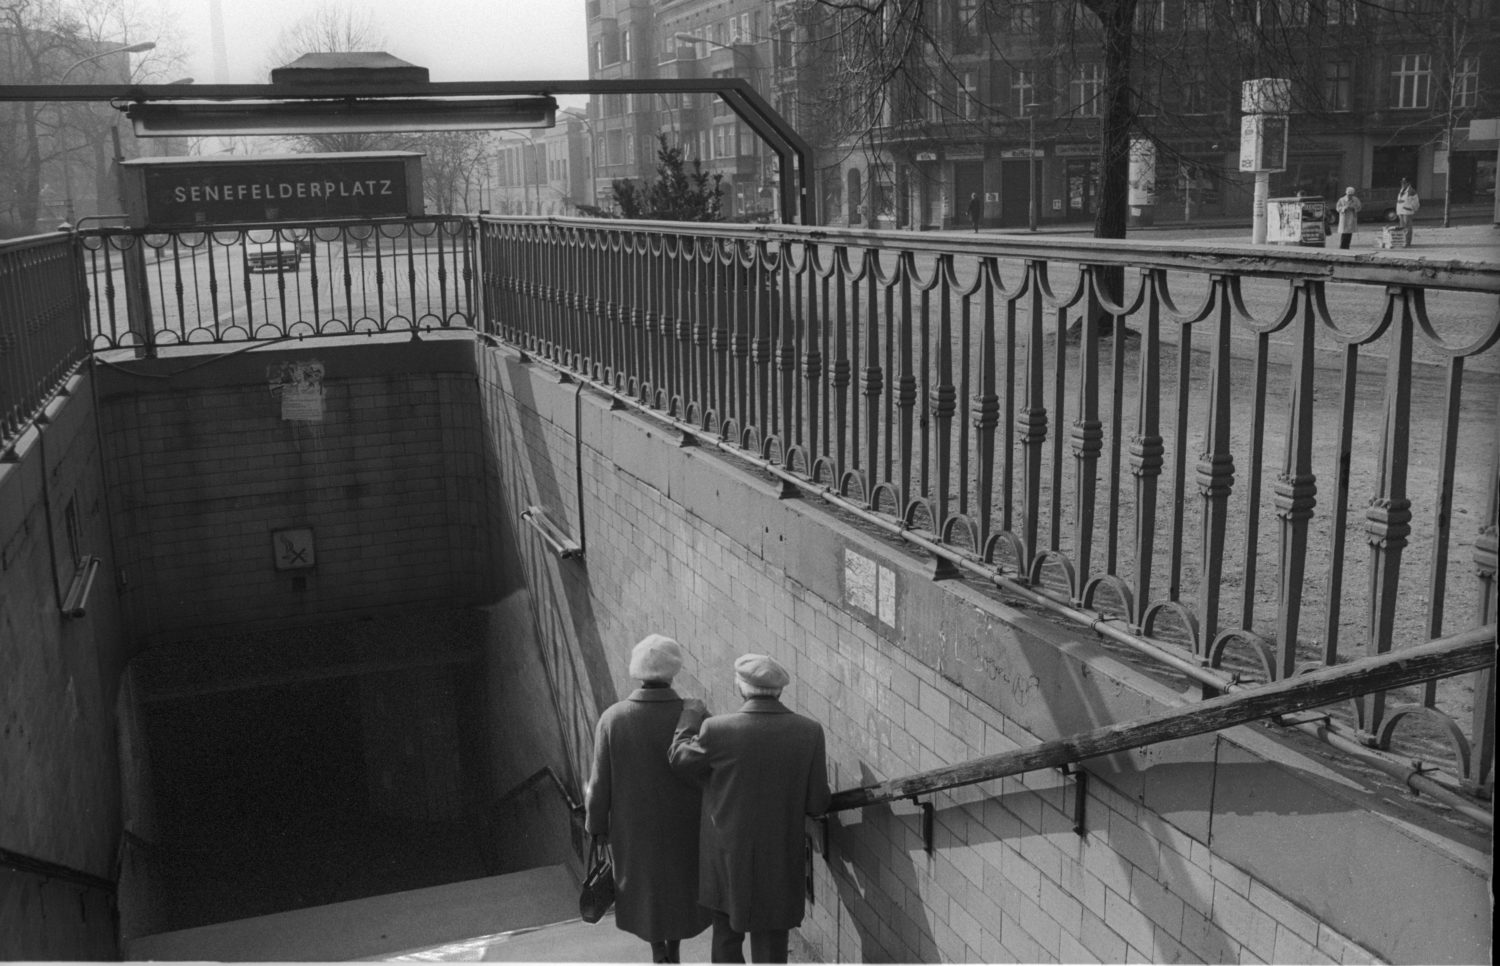 Einsamkeit in Berlin: Älteres Paar am U-Bahnhof Senefelderplatz, 1989. Foto: Imago/Rolf Zöllner